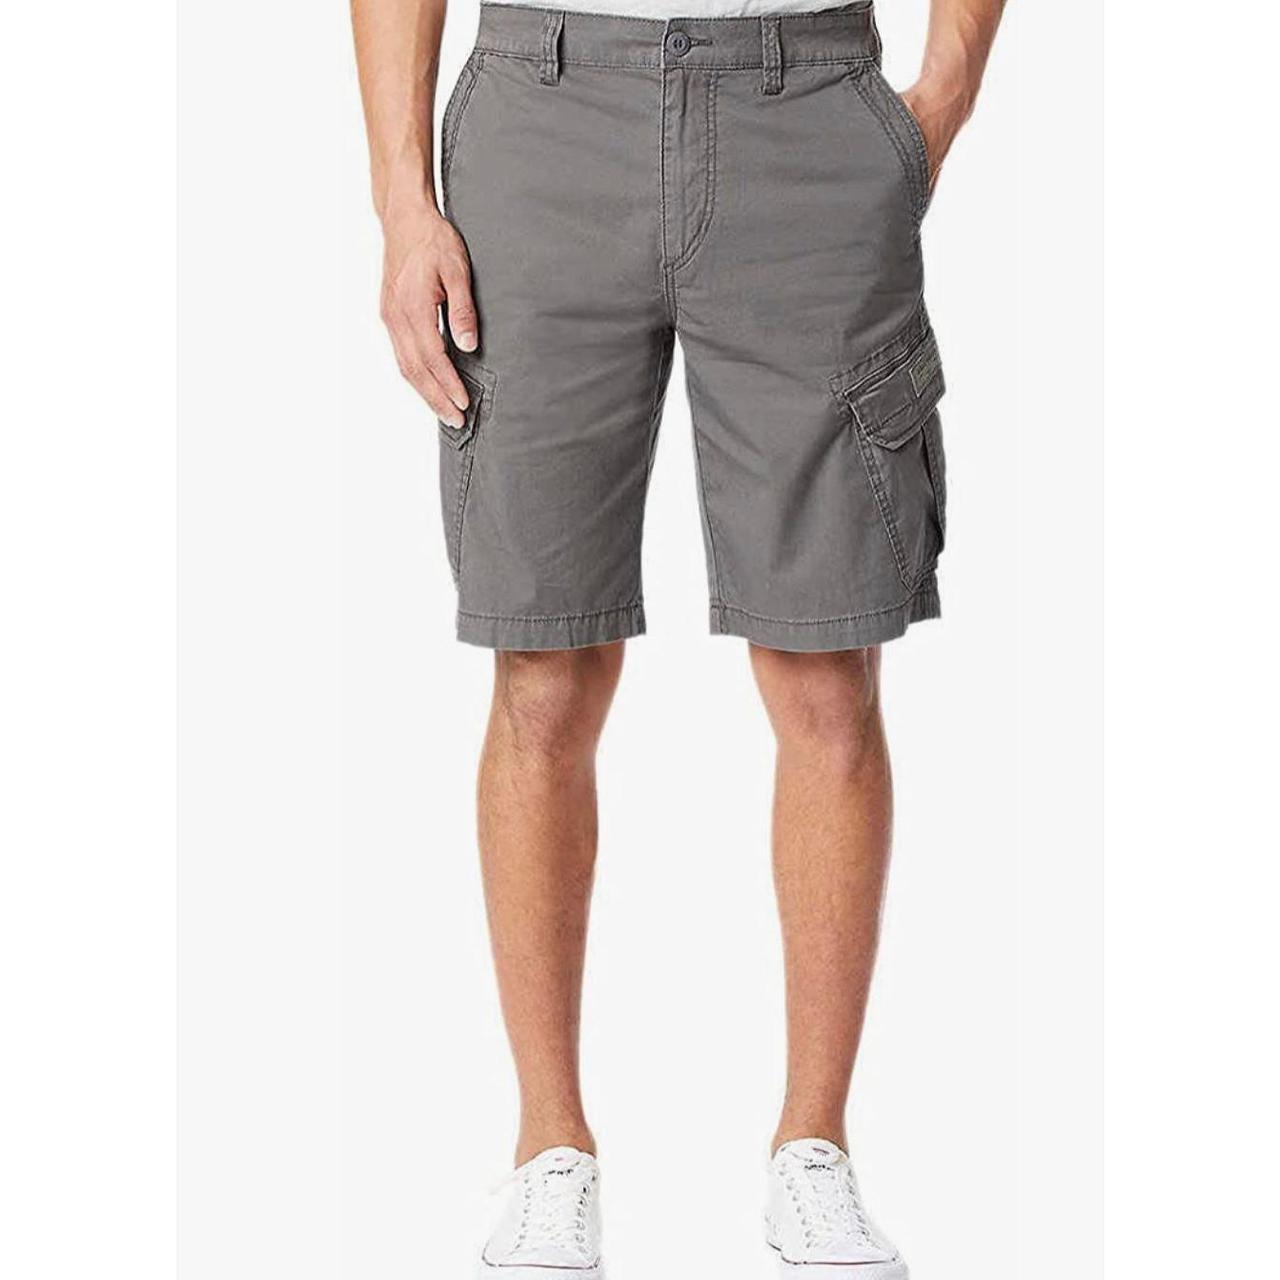 Union Bay Men's Grey Shorts